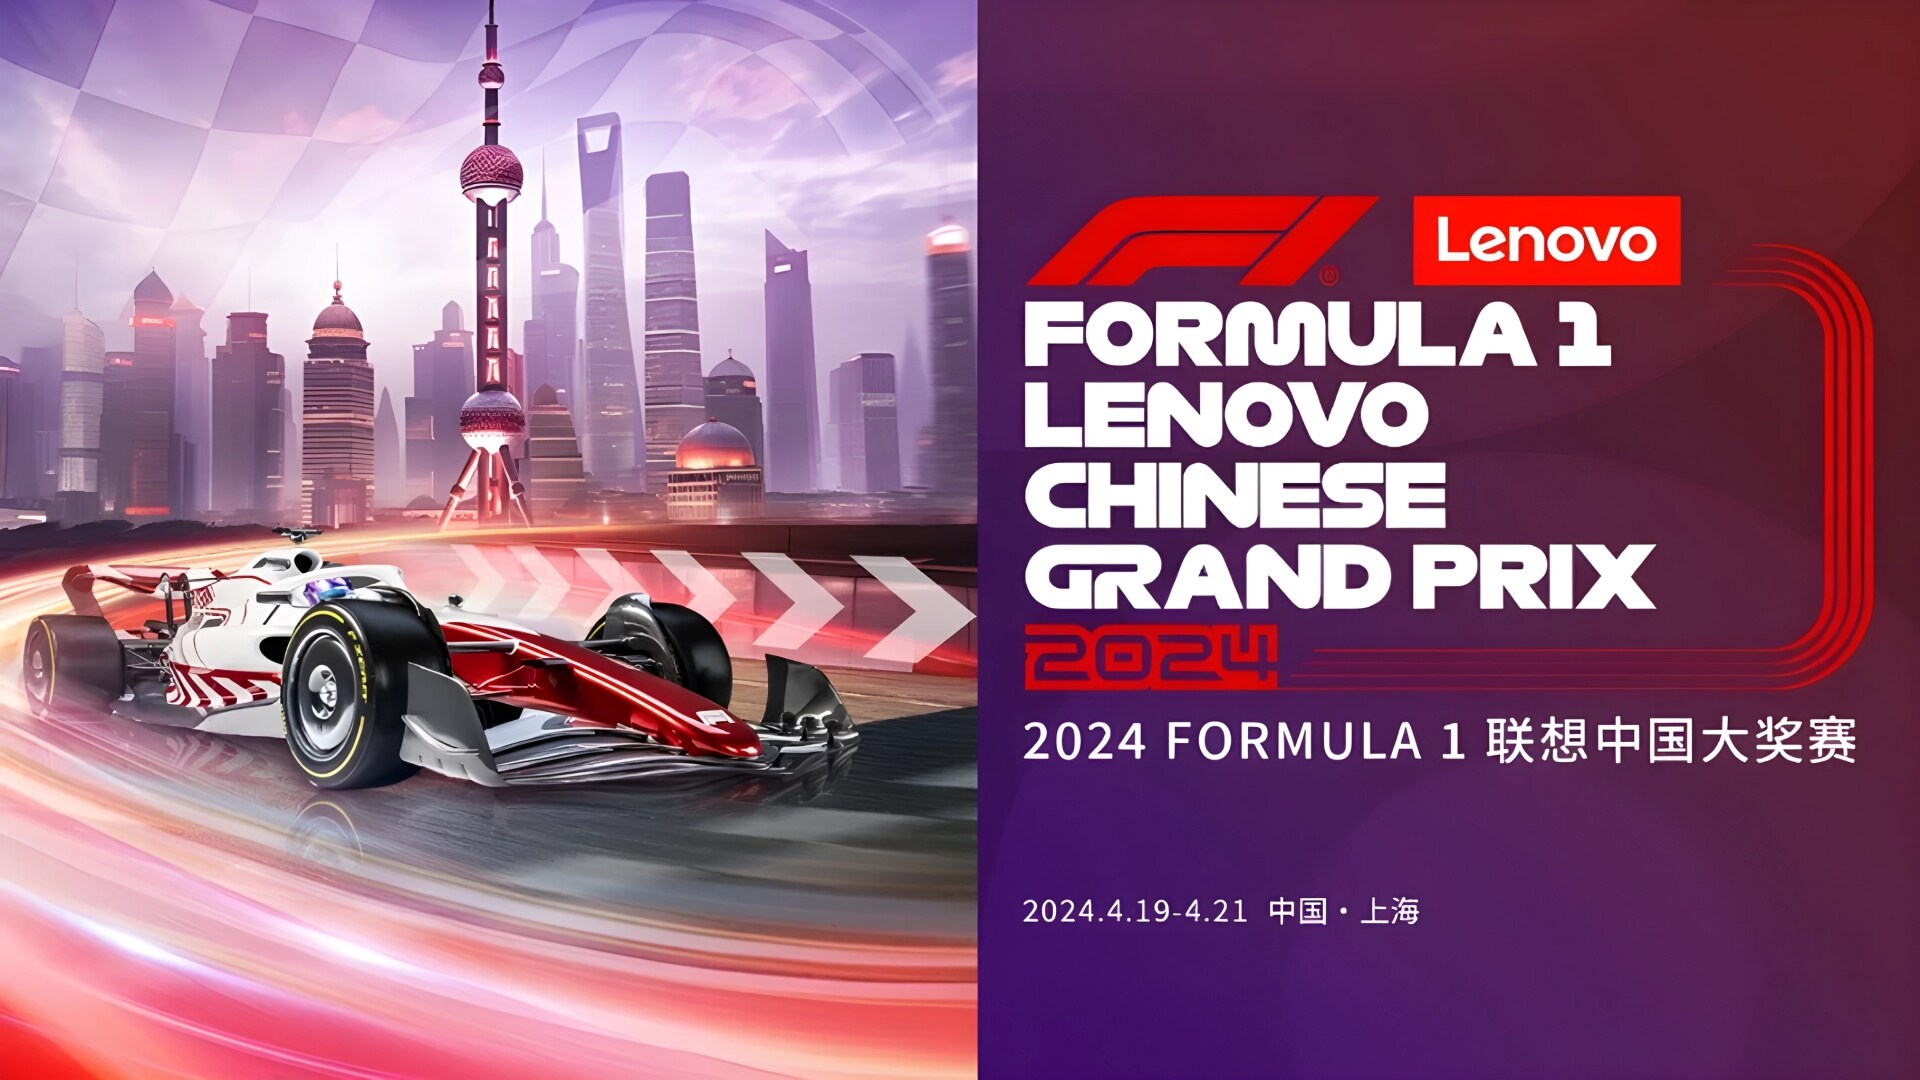 Formula 1 Lenovo Chinese Grand Prix 2024 (Credits Lenovo)